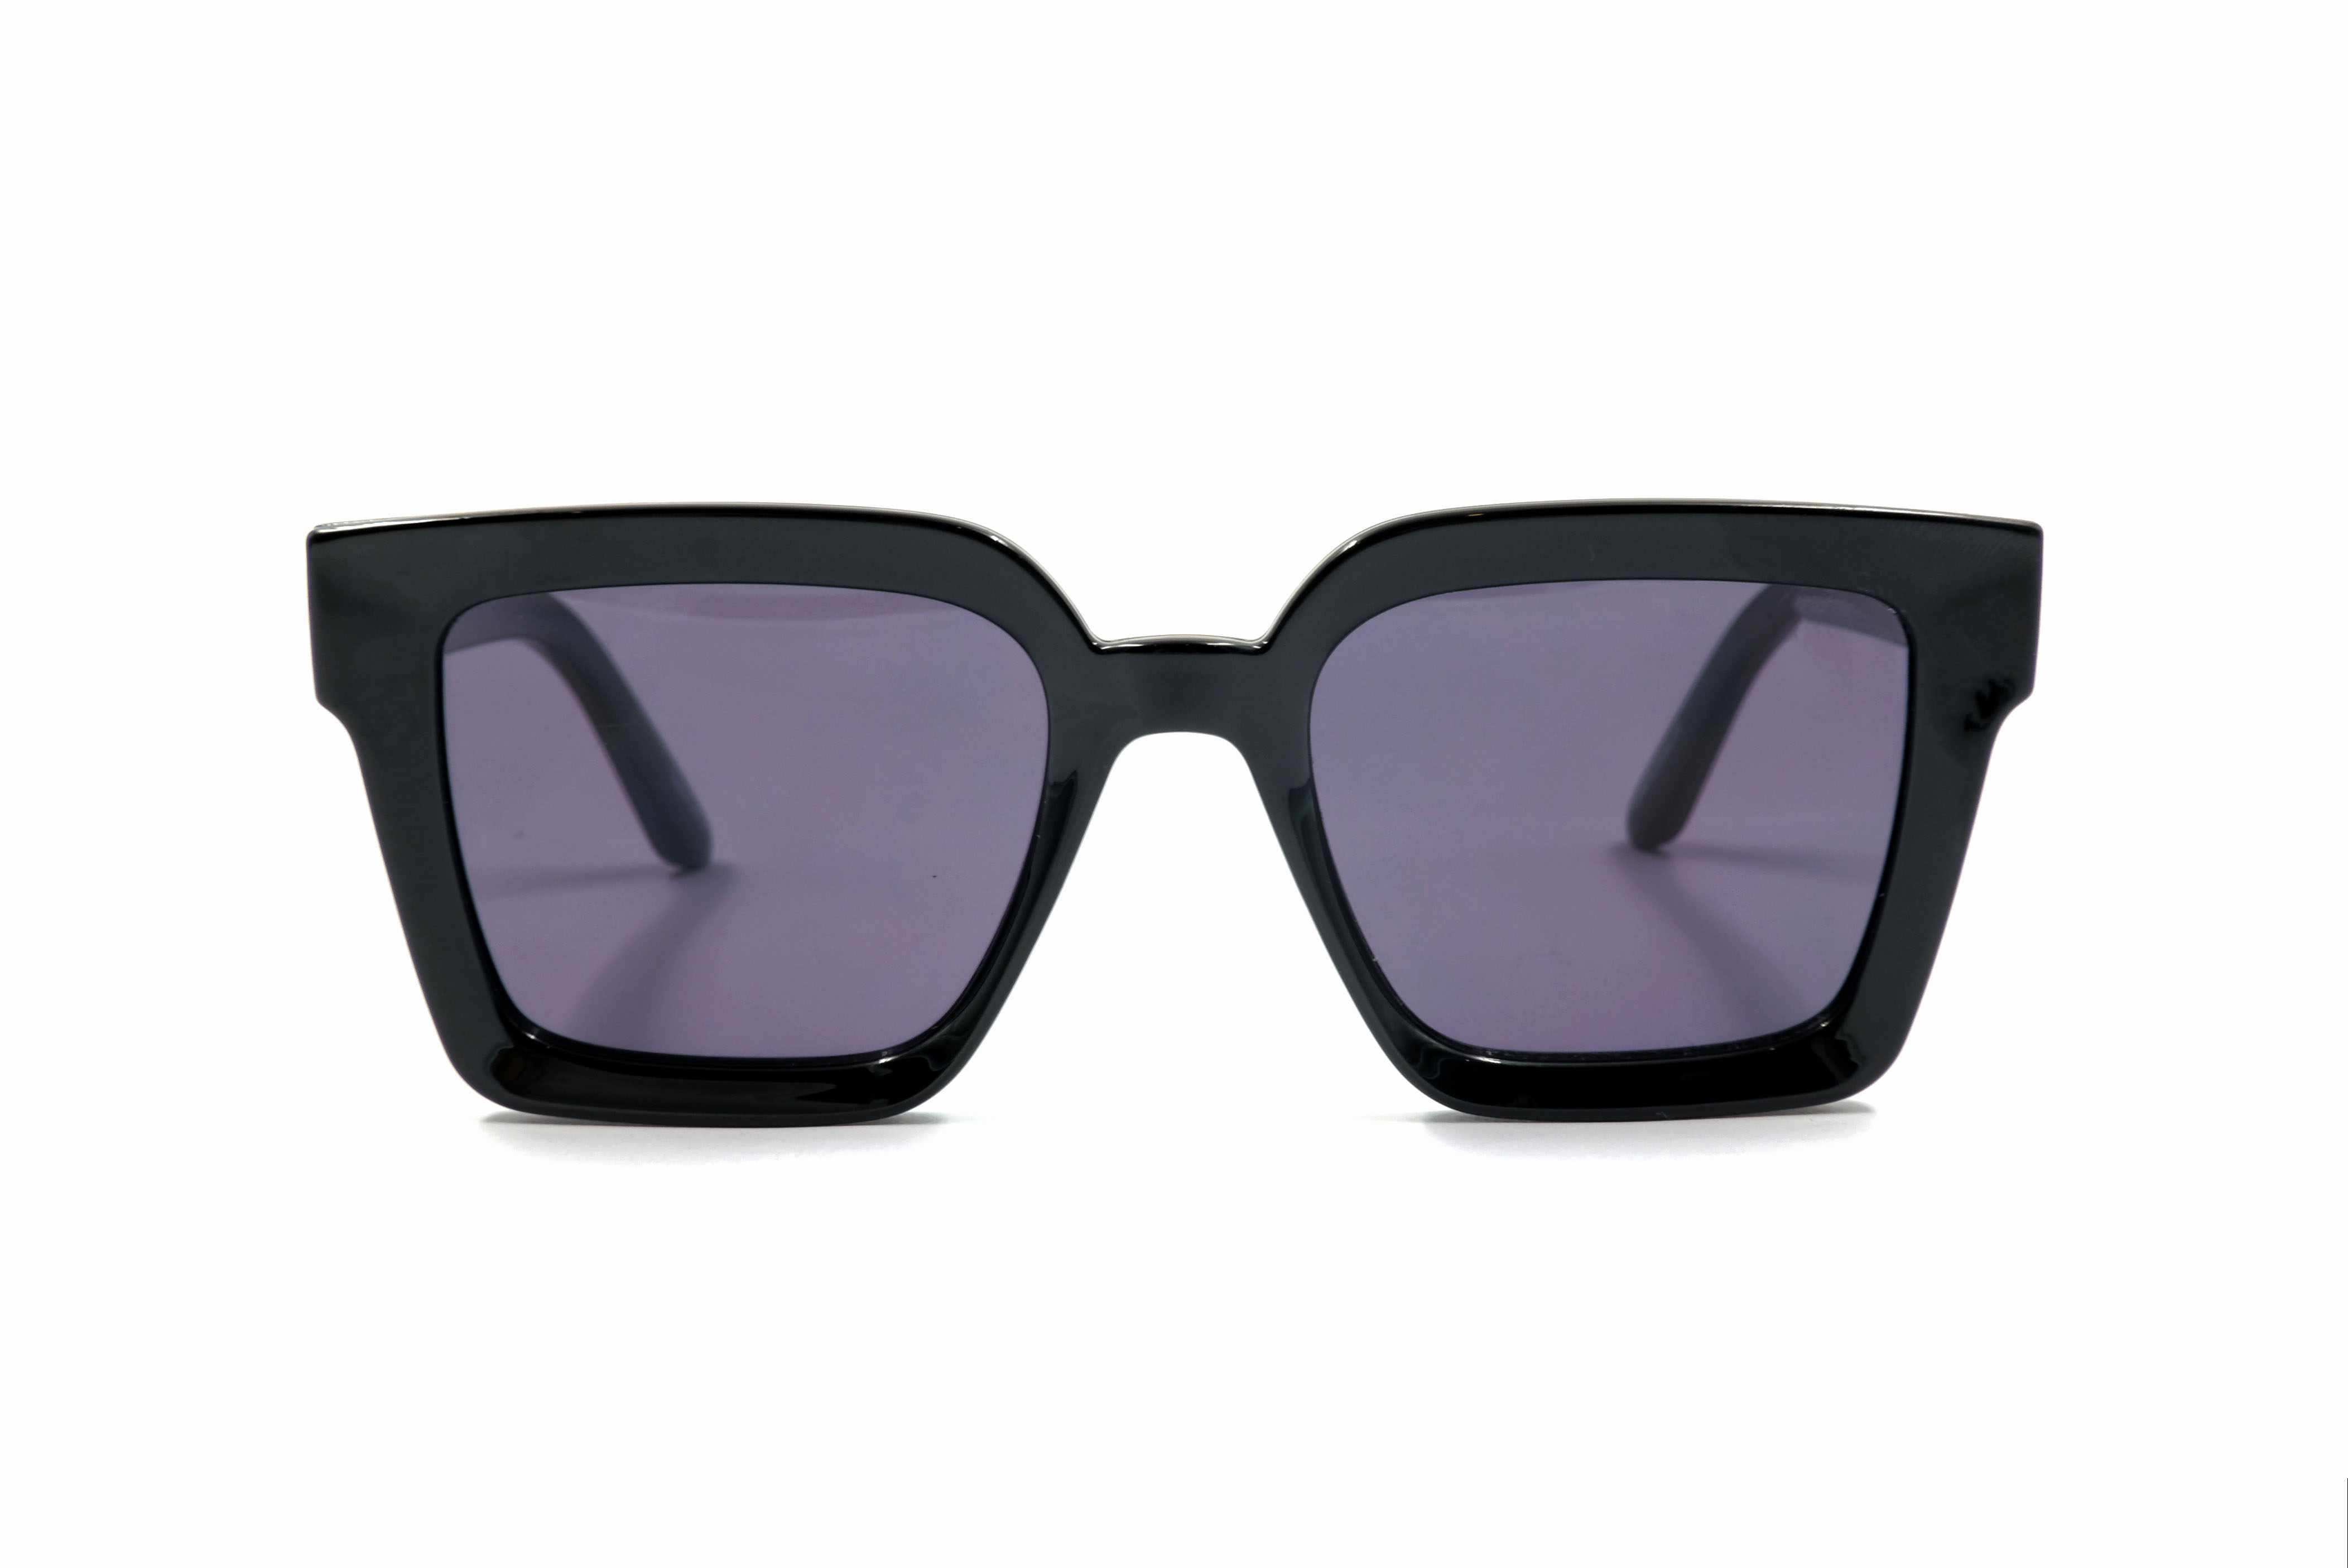 Gafas de sol cuadradas negras personalizadas Gafas de sol de marca personalizadas Oem Odm Gafas de sol Fabricantes